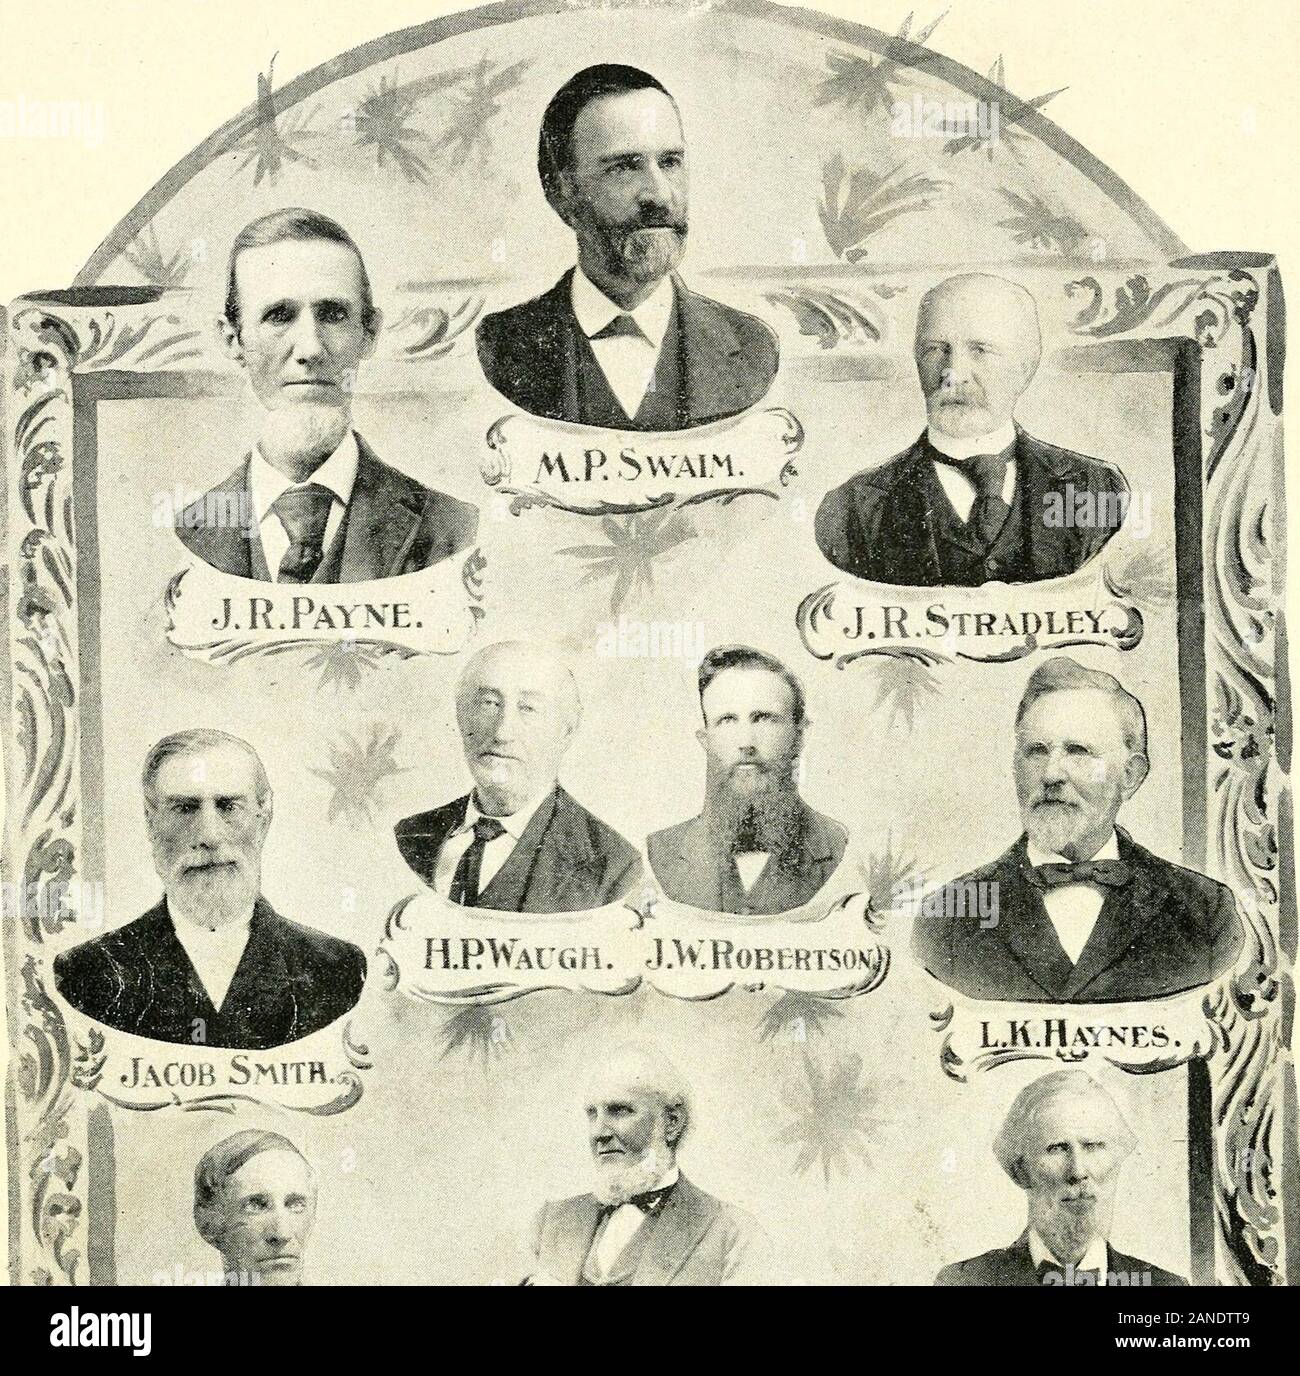 Official record of the Holston Annual Conference, Methodist Episcopal Church, South, seventy-fourth session, held at Bristol, Tenn., October 6-13, 1897 . Fite, Nashville, Tenn.; Rev. Collins Denny, Nashville, Tenn.;Rev. J. M. Binkley, Sherman, Texas; Rev. Paul Whitehead, Rich-mond, Va.; Major R. W. Millsaps, Jackson, Miss.; J. A. Odell, Esq.,Greensboro, N. C.; Rev. J. M. Mason, Opelika, Ala.; Rev. W. P.Lovejoy, Athens, Ga.; W. C. Kindrick, Esq., Louisville, Ky.; S. M.Kennard, Esq., St. Louis, Mo. GENERAL WOMANS PARSONAGE AND HOMEMISSION SOCIETY. Miss Belle H. Bennett, President, Richmond, Ky,; Stock Photo